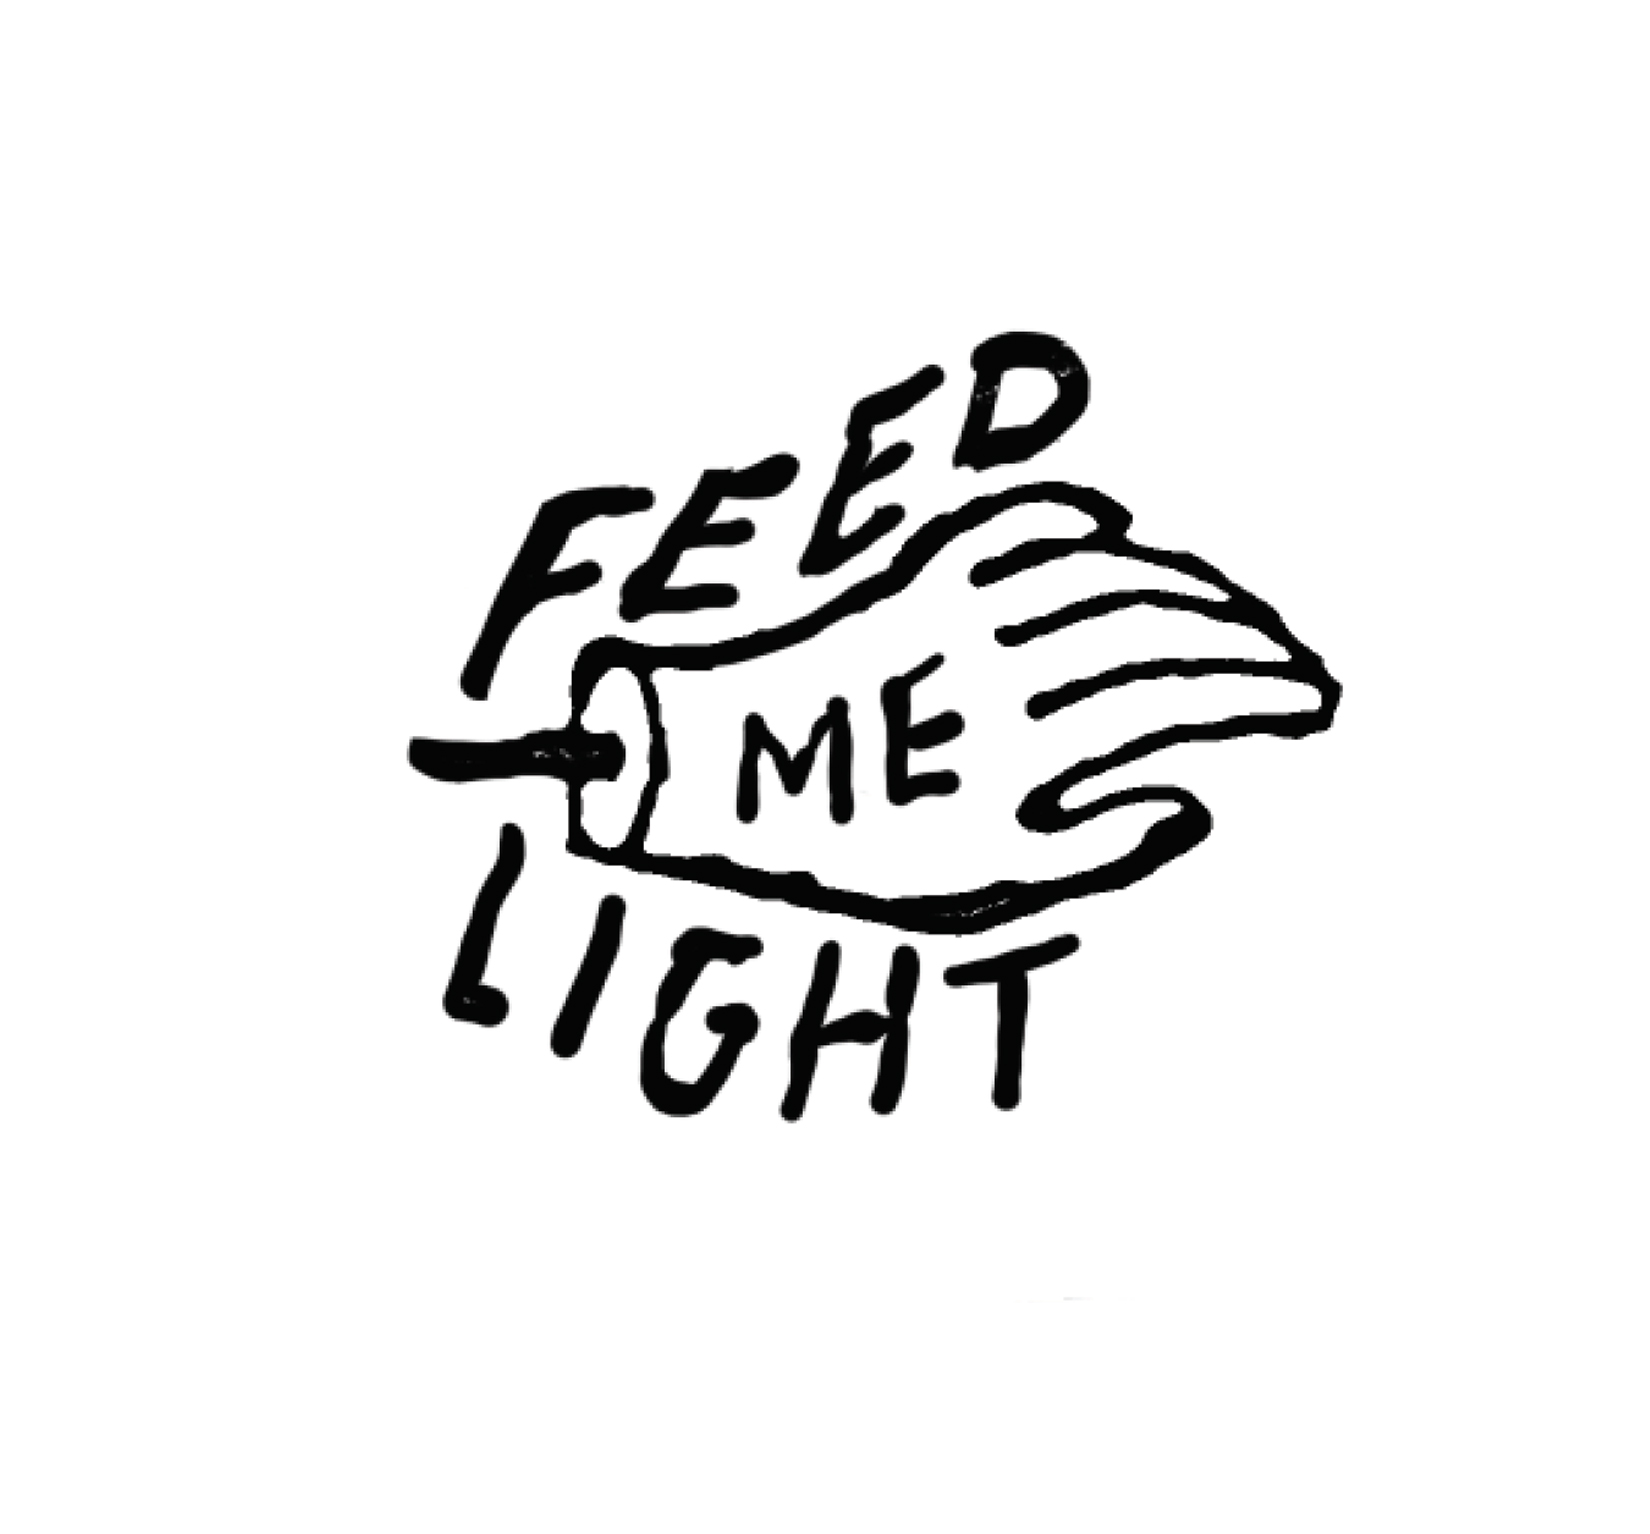 Feed Me Light